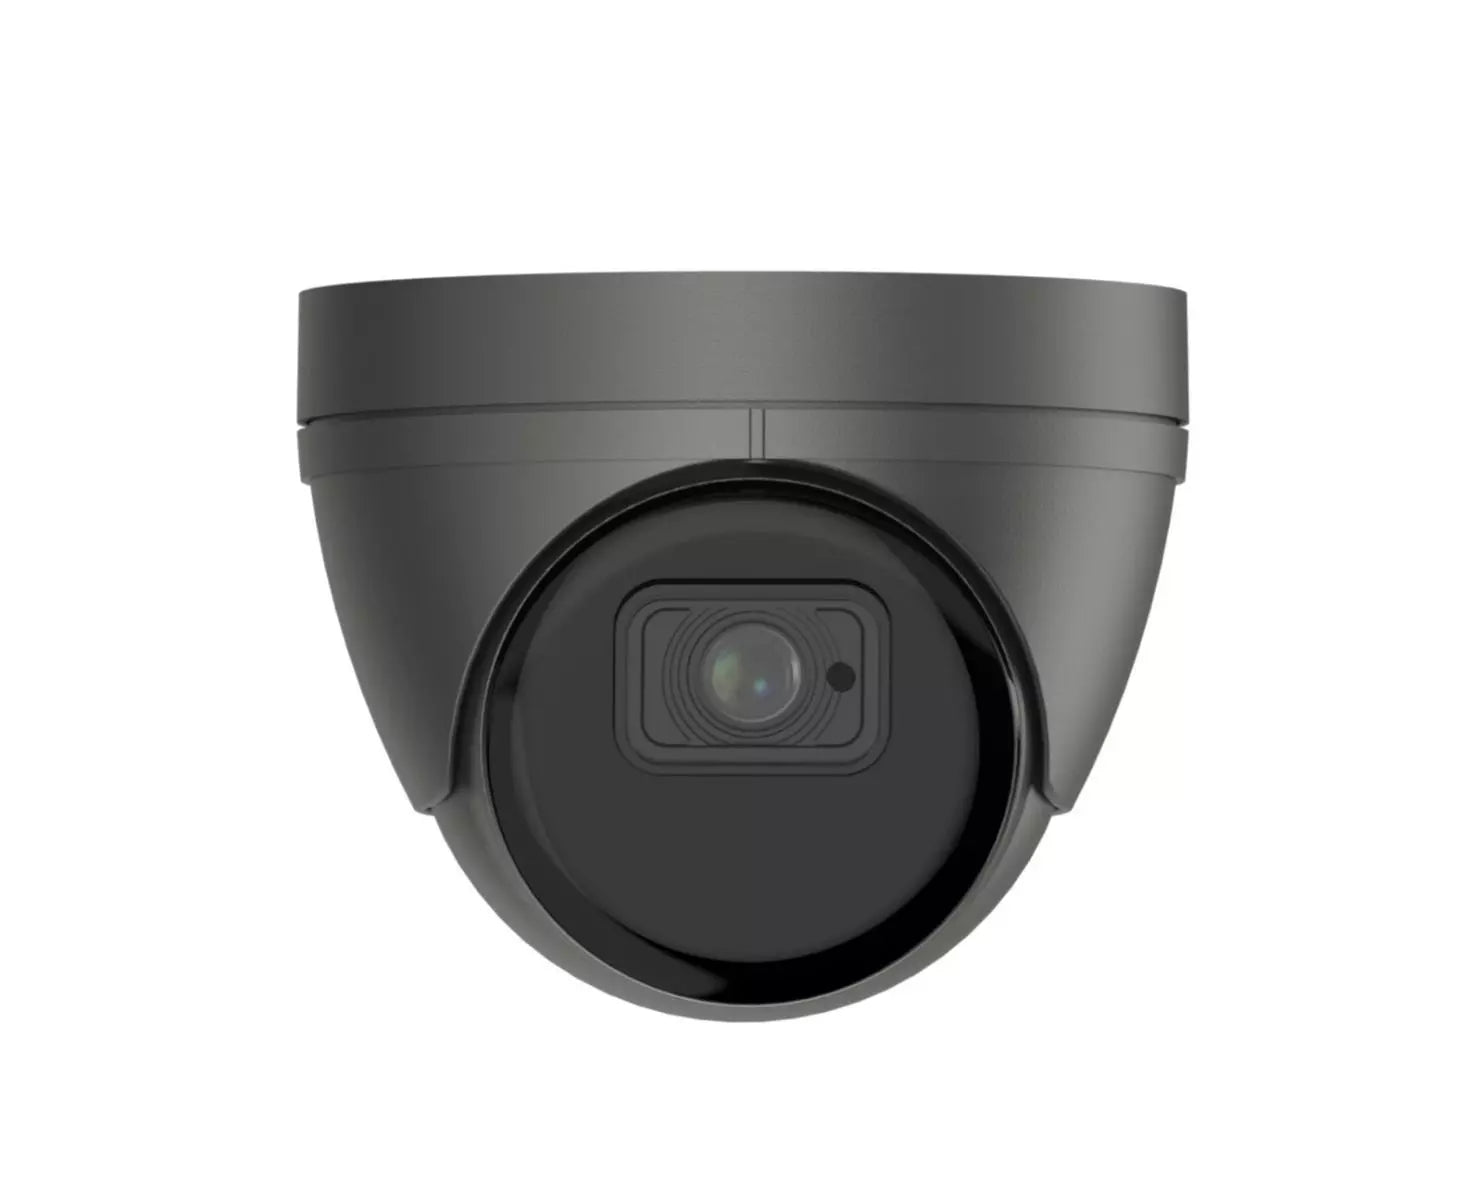 Backstreet Surveillance PROKIT8-90D-4KG 8 Black Dome Security Camera System 4K